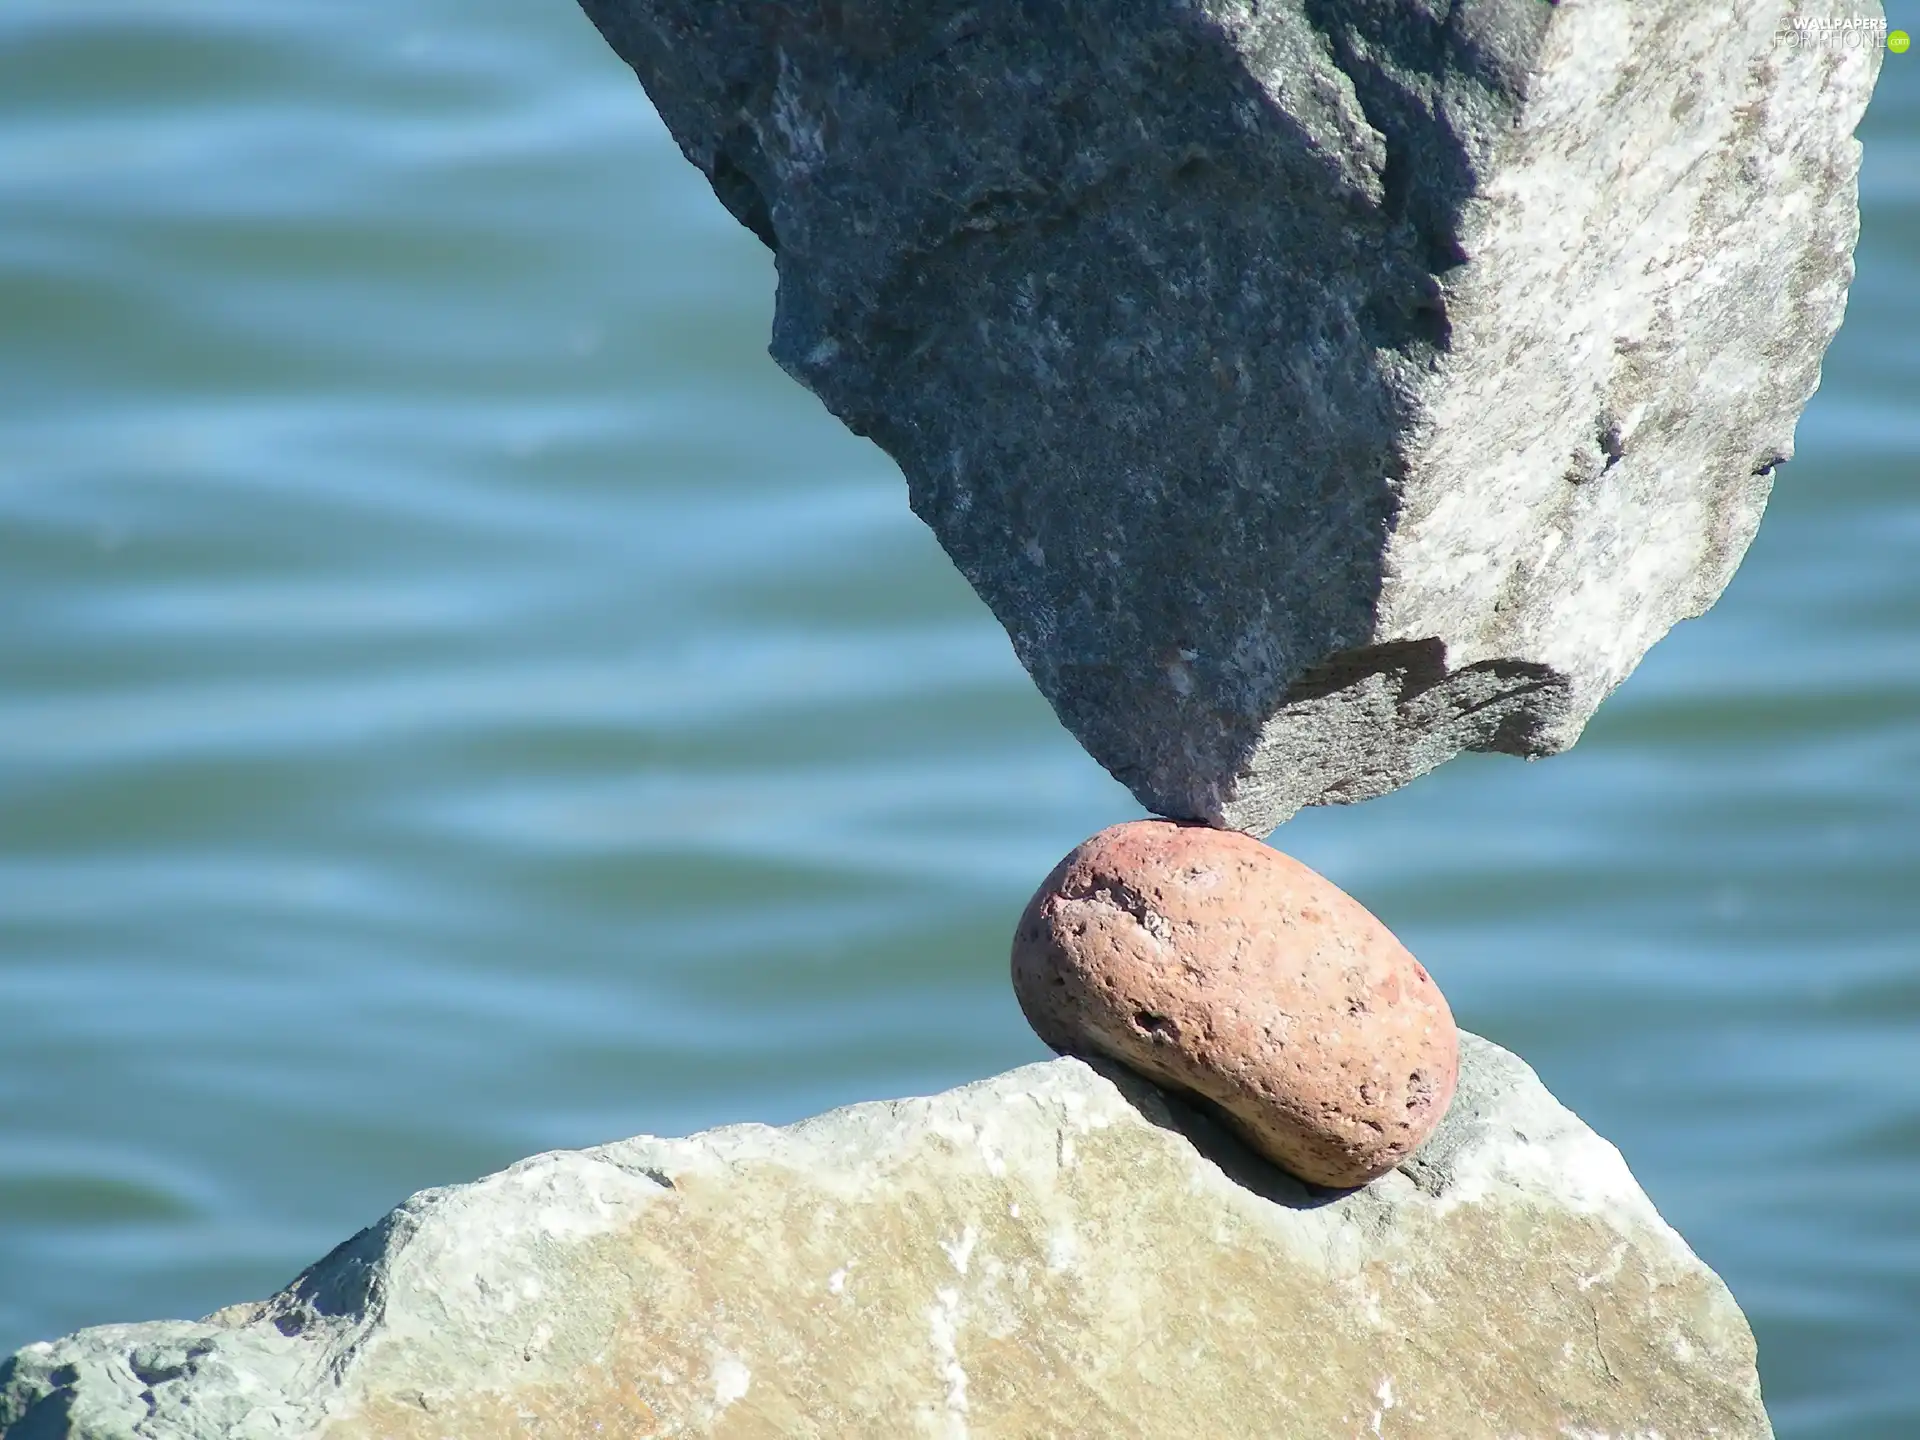 Stone, water